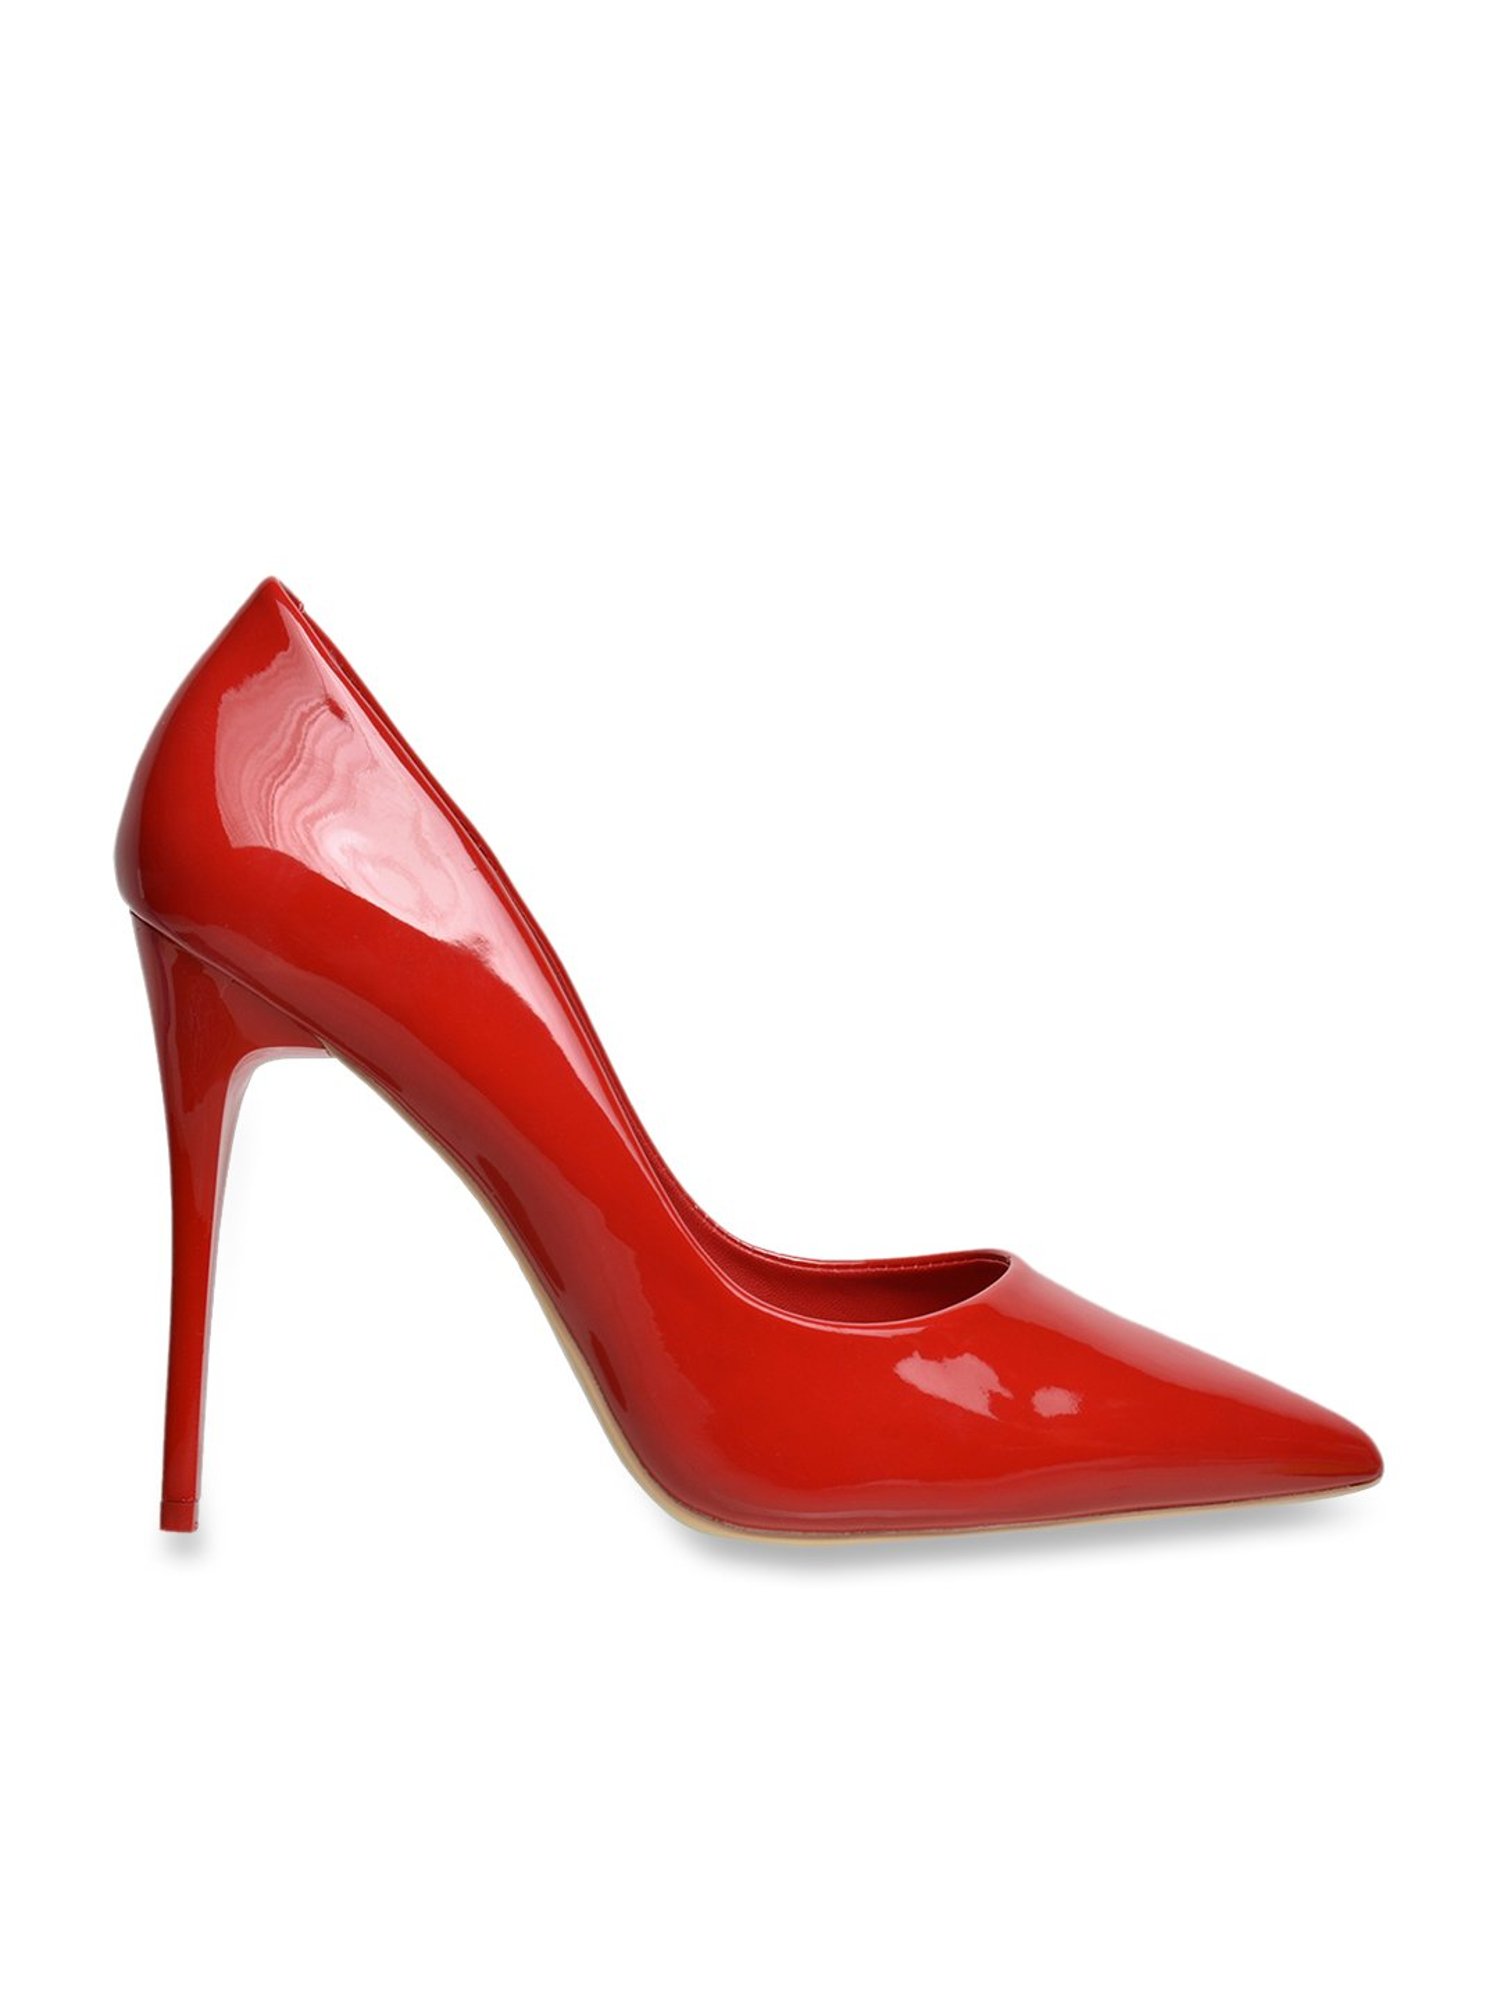 Sexy High Heels Sandals 16cm | Red High Heels 16 Cm | Stiletto Sandals |  Ankle Strap | Shoes - Women's Sandals - Aliexpress